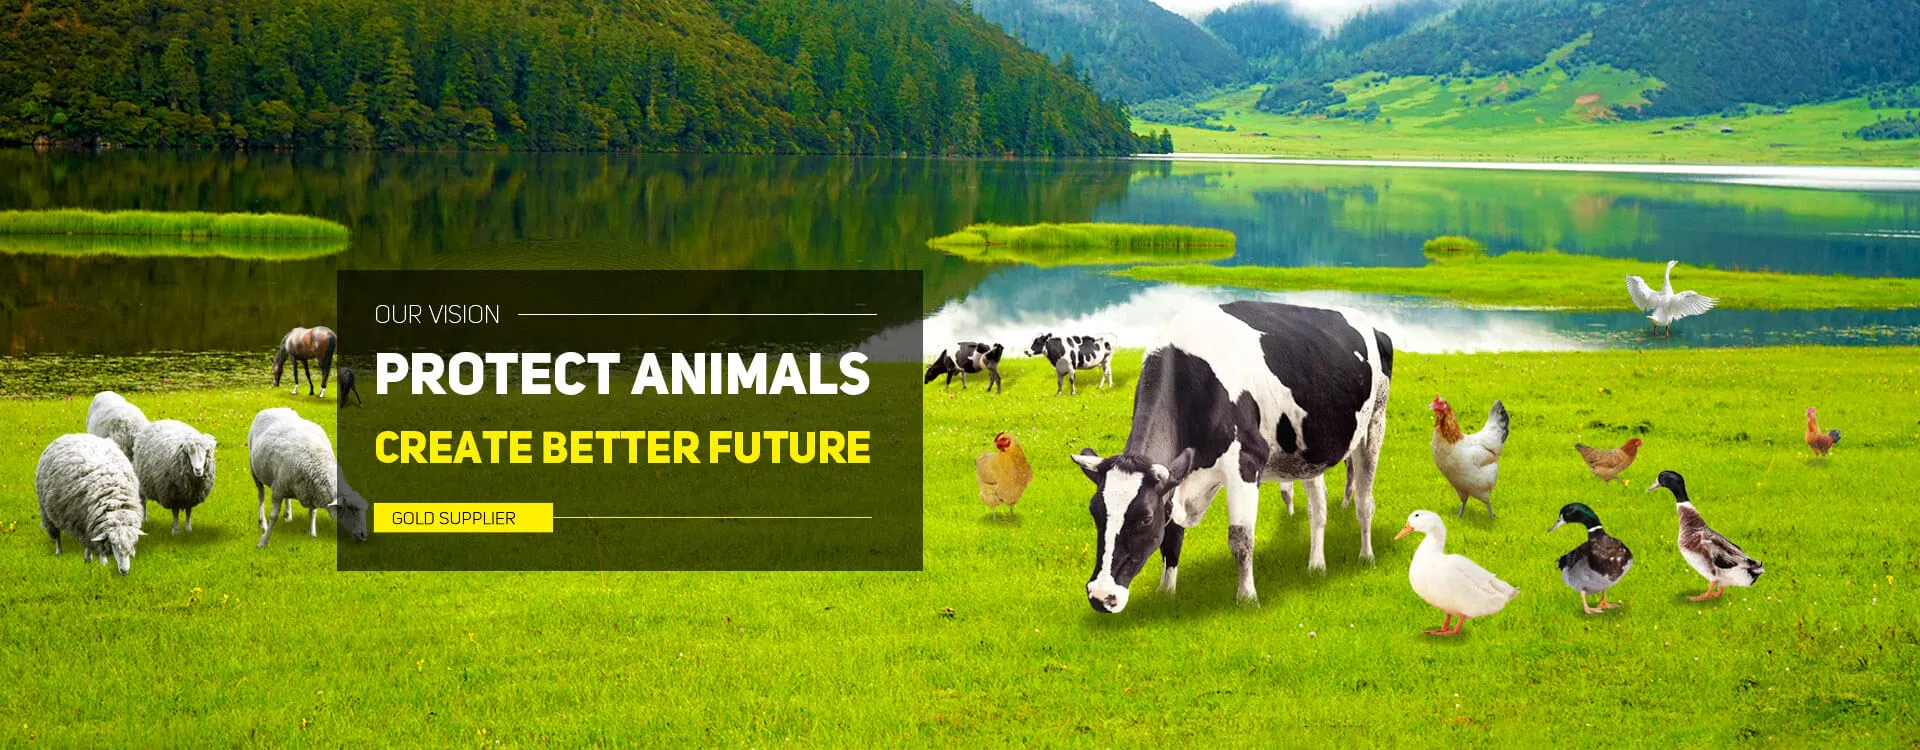 Protect animals, create better future